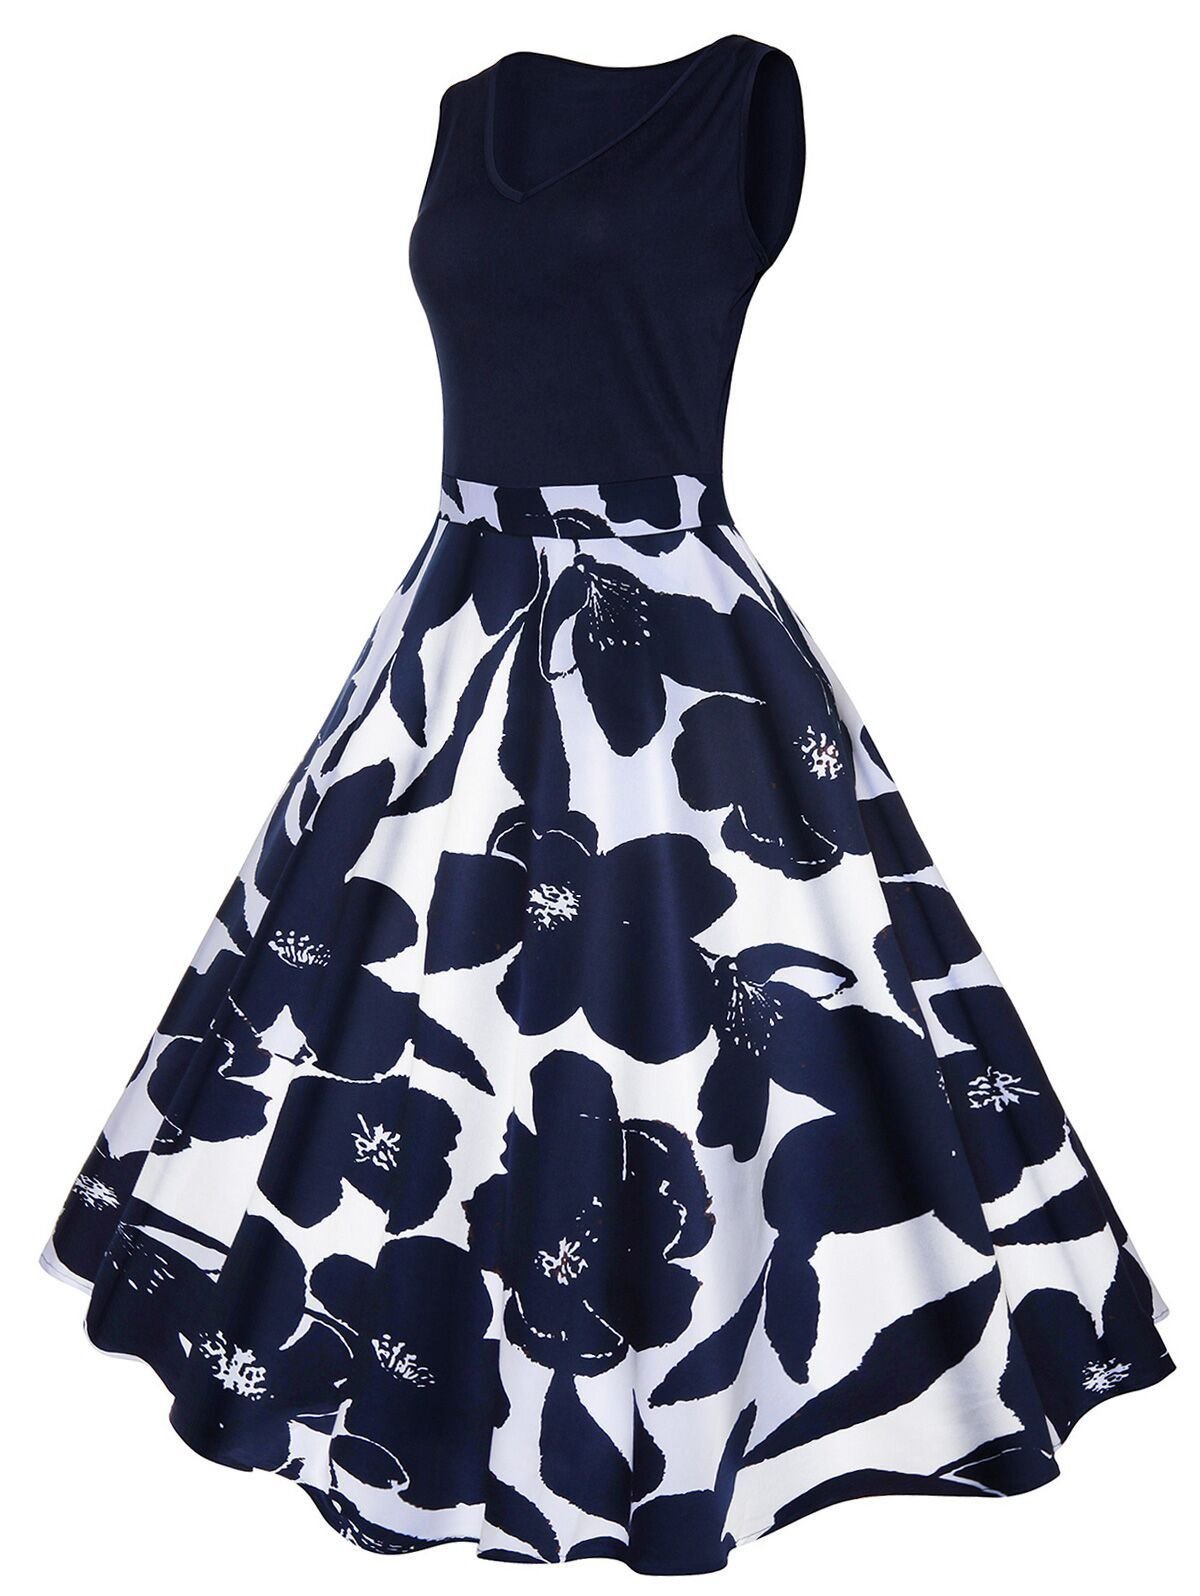 Black 1950s Floral Plus Size Swing Dress